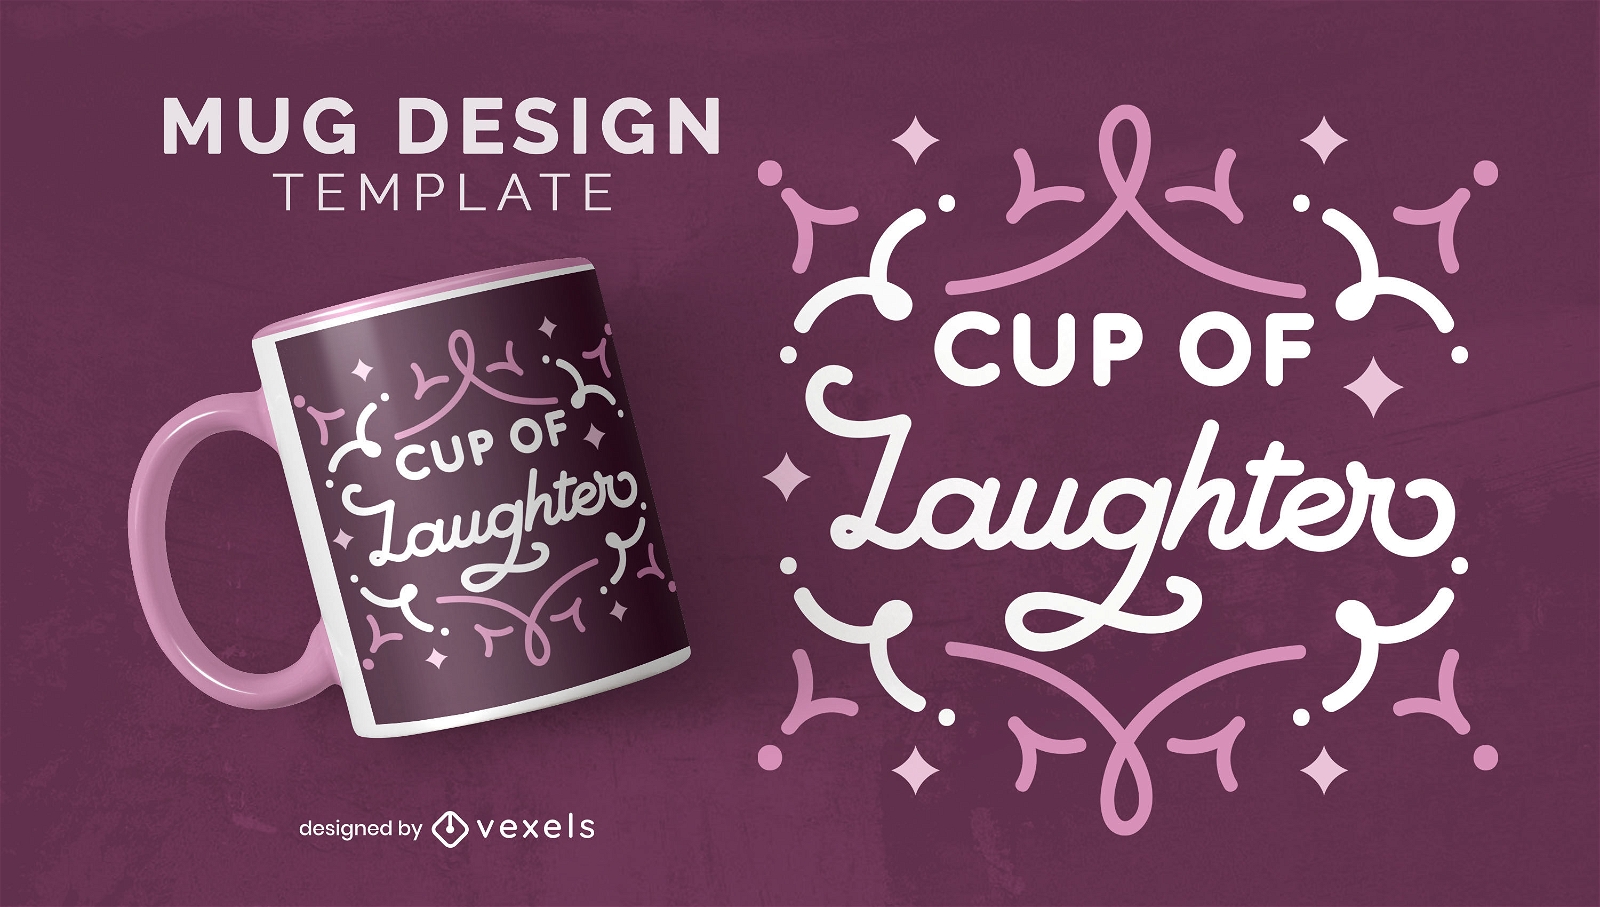 Cup of laughter mug design